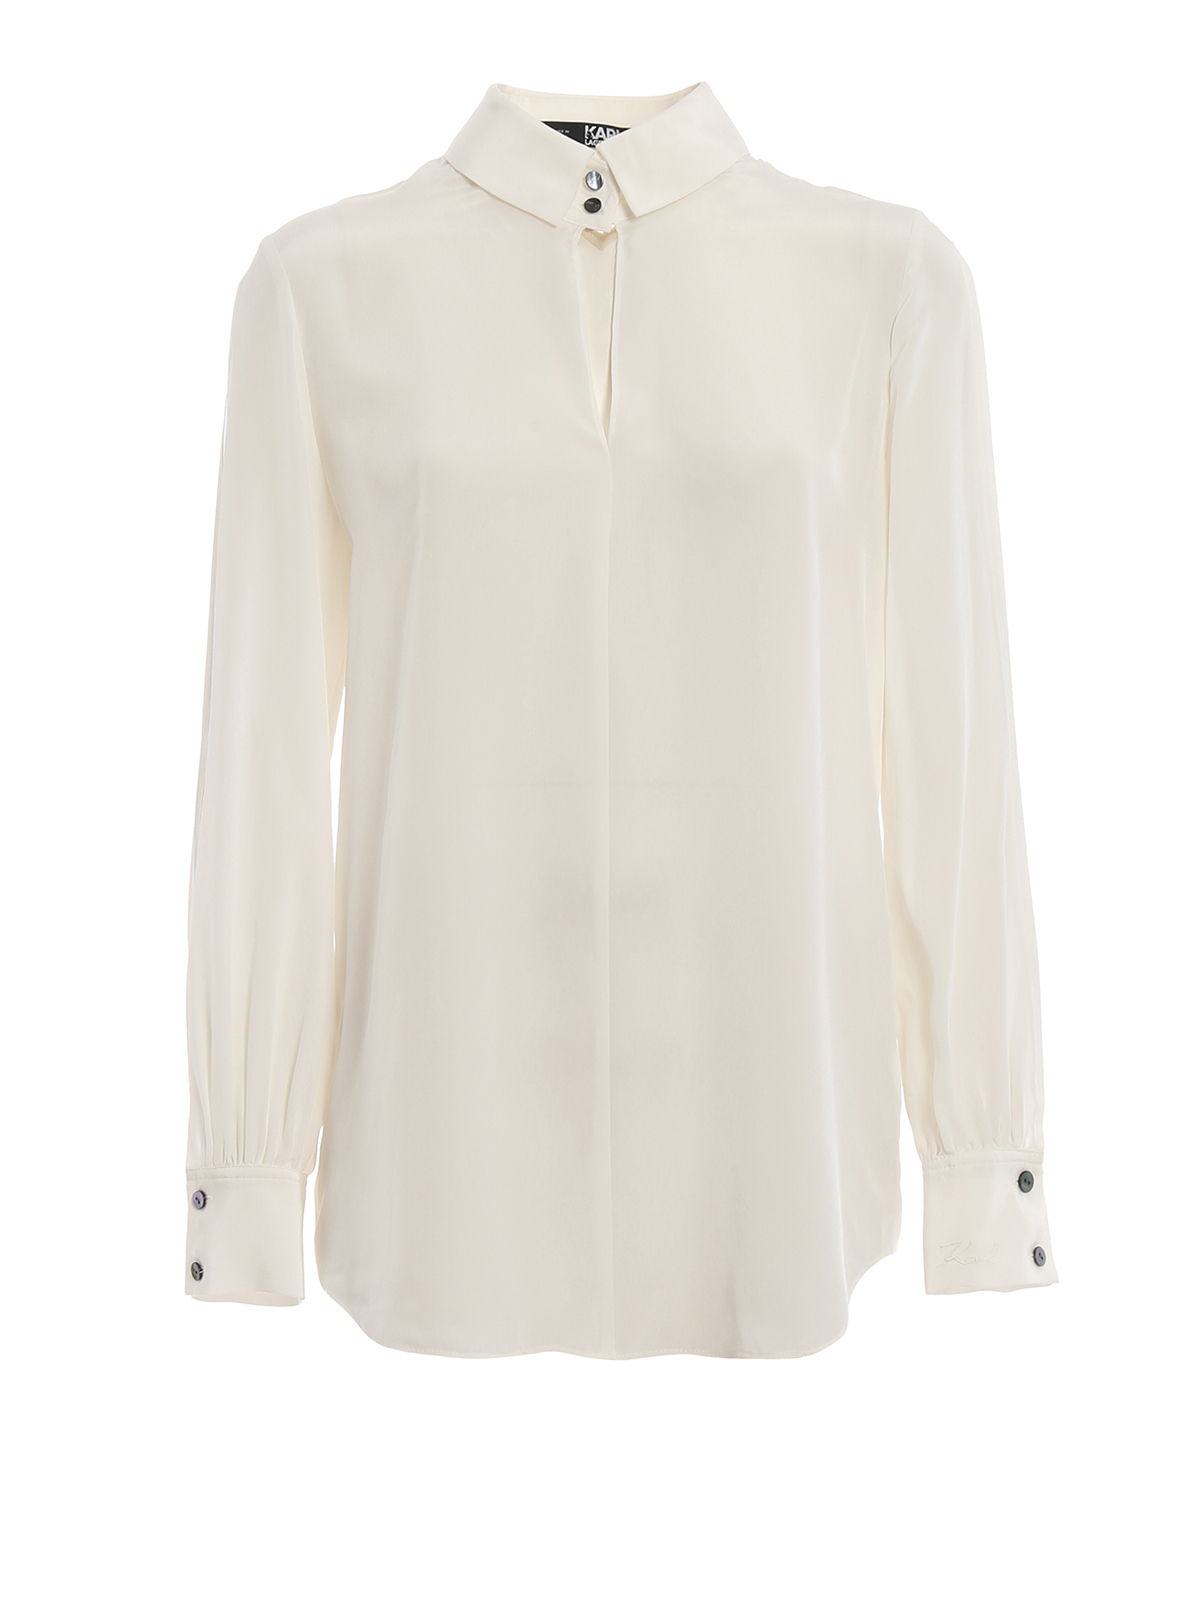 Shirts Karl Lagerfeld - Keyhole white silk shirt - 91KW1607 | iKRIX.com